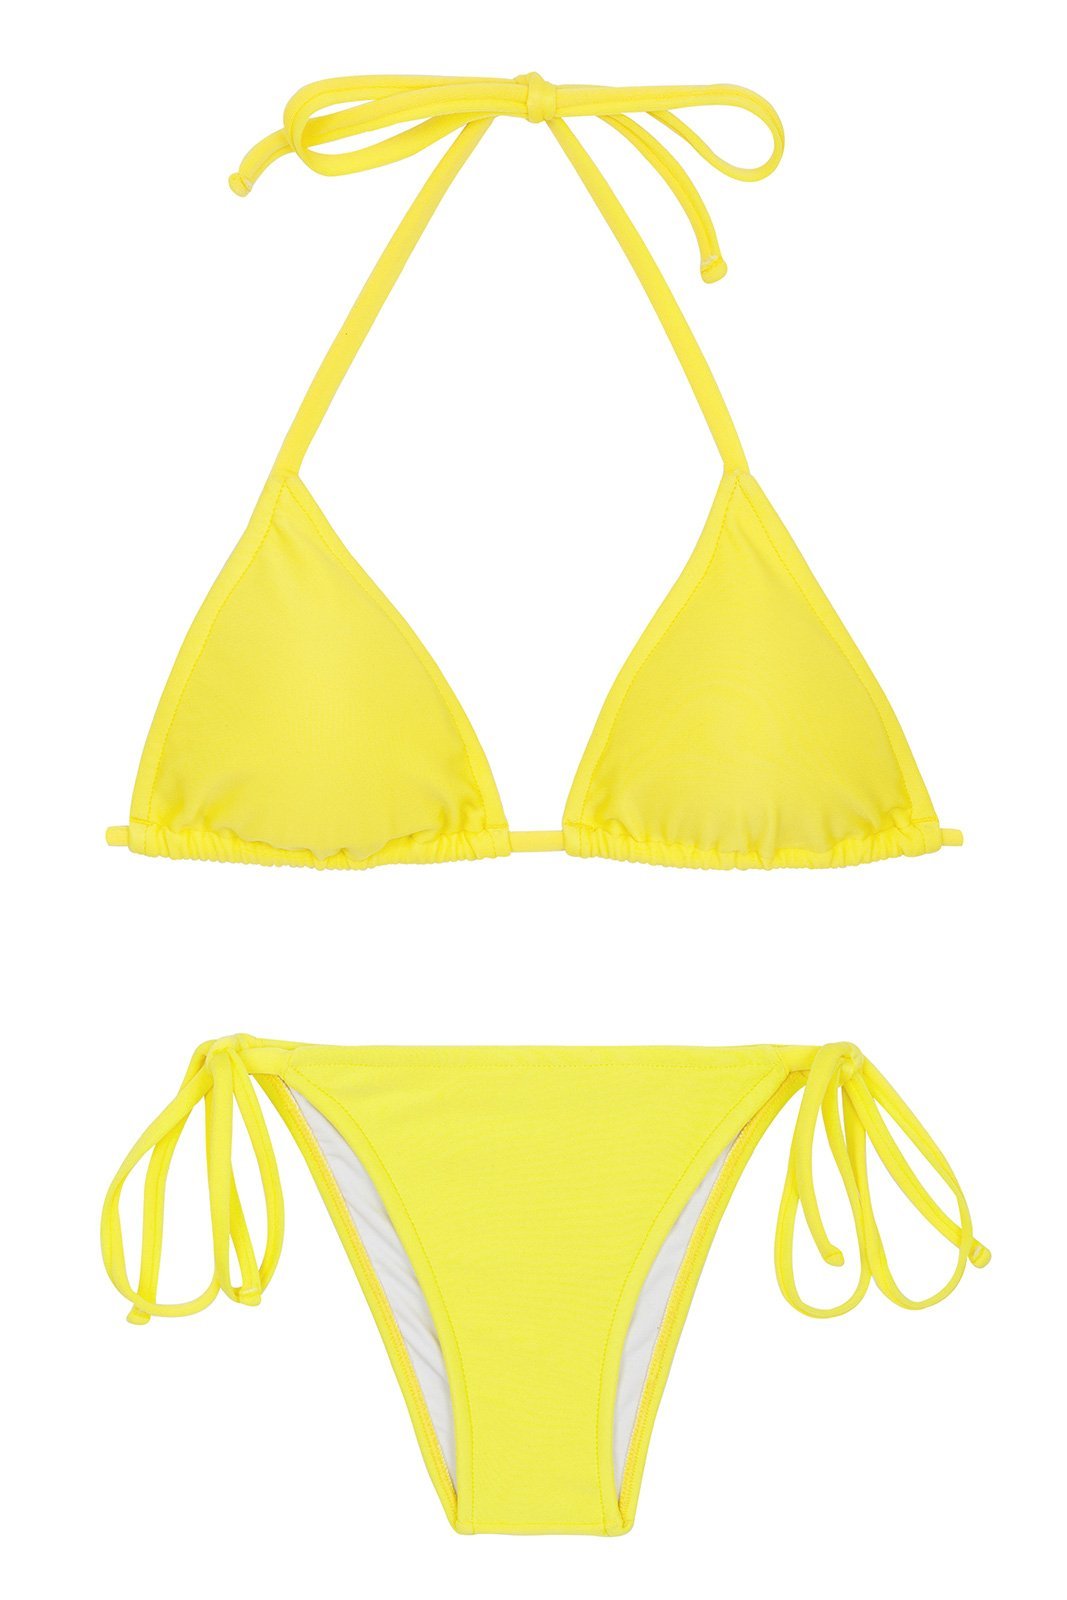 Lemon Yellow Triangle Top Bikini Beach Strega Rolote Rio De Sol